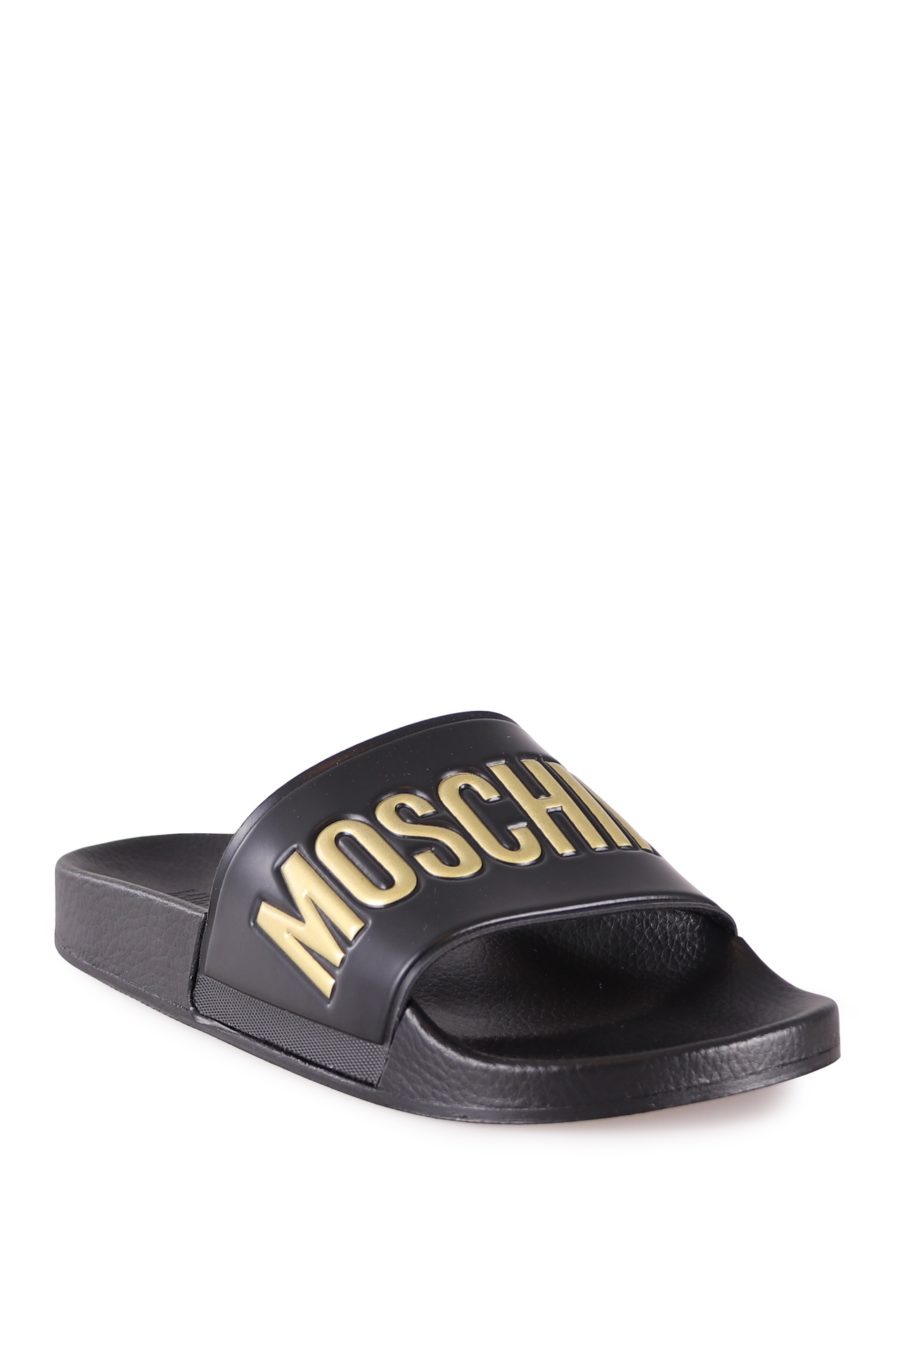 Moschino Couture tongs noires avec logo doré - e30f15fc3b69f955d5371aa614193e3cb53504a8